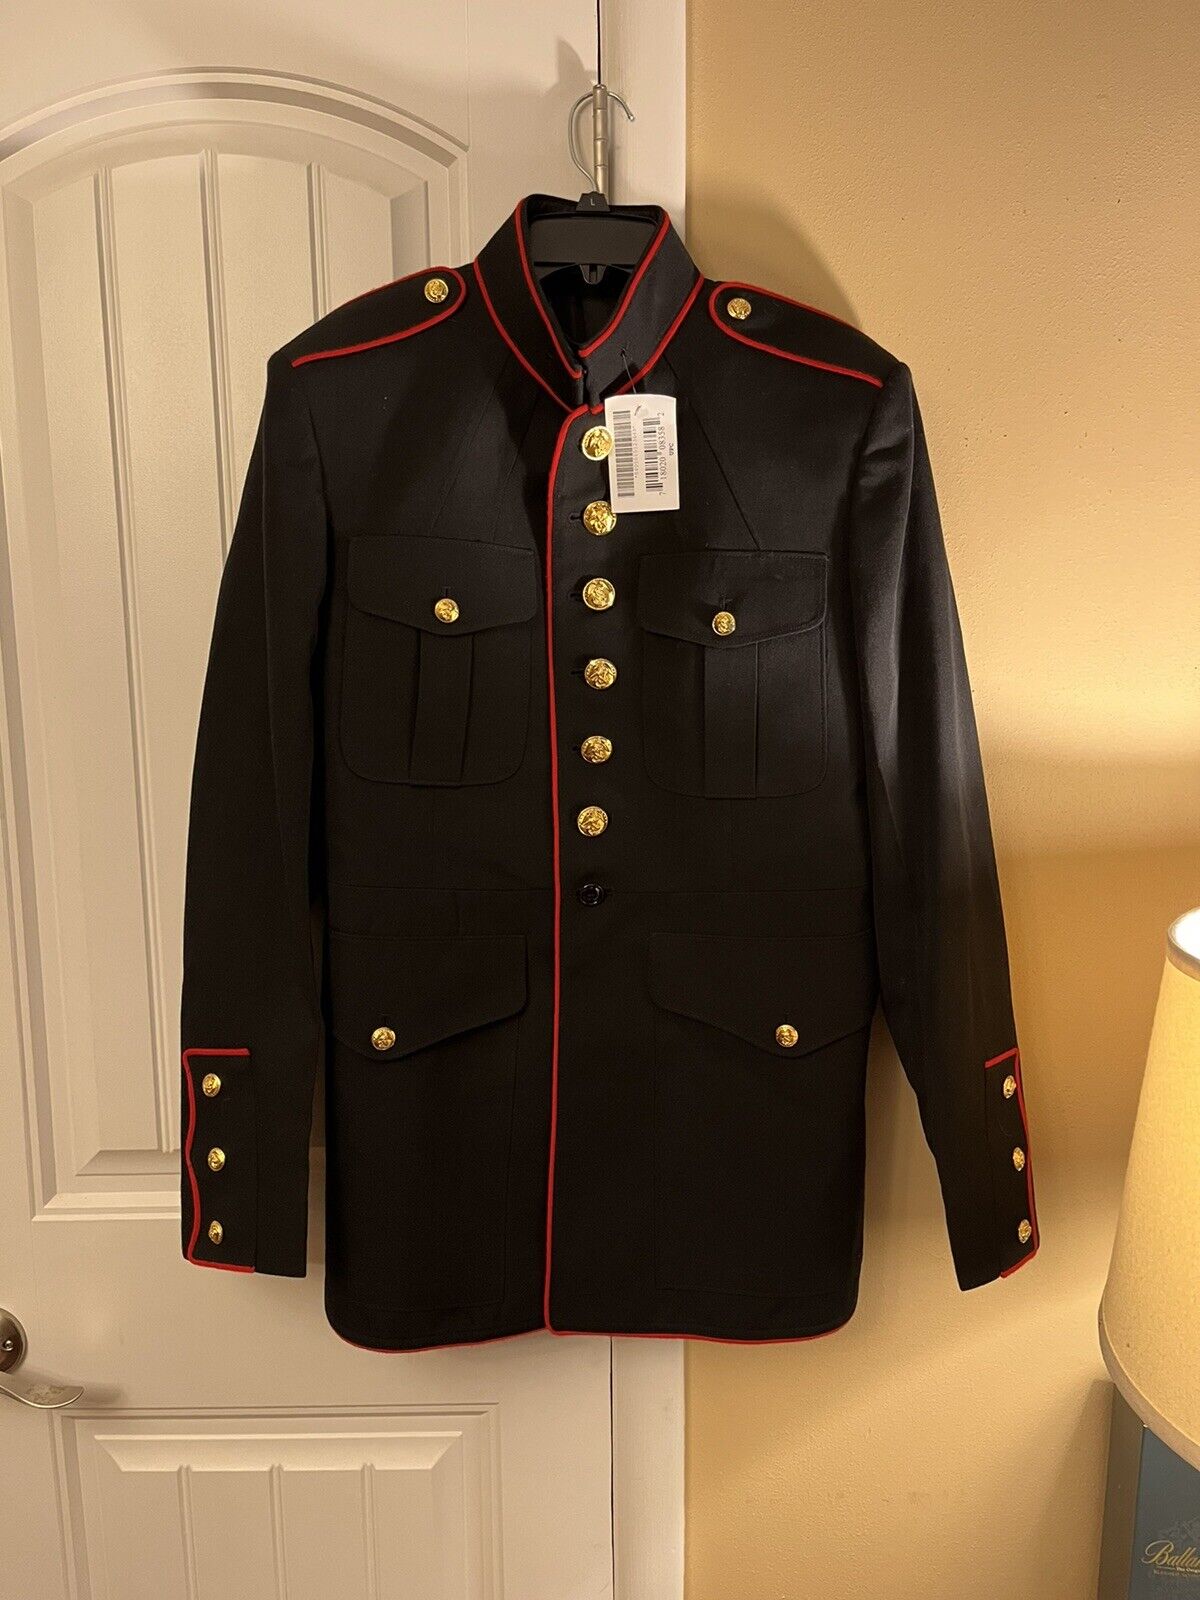 NEW USMC US MARINE CORPS UNIFORM DRESS Coat JACKET Size 46R Dress Blues